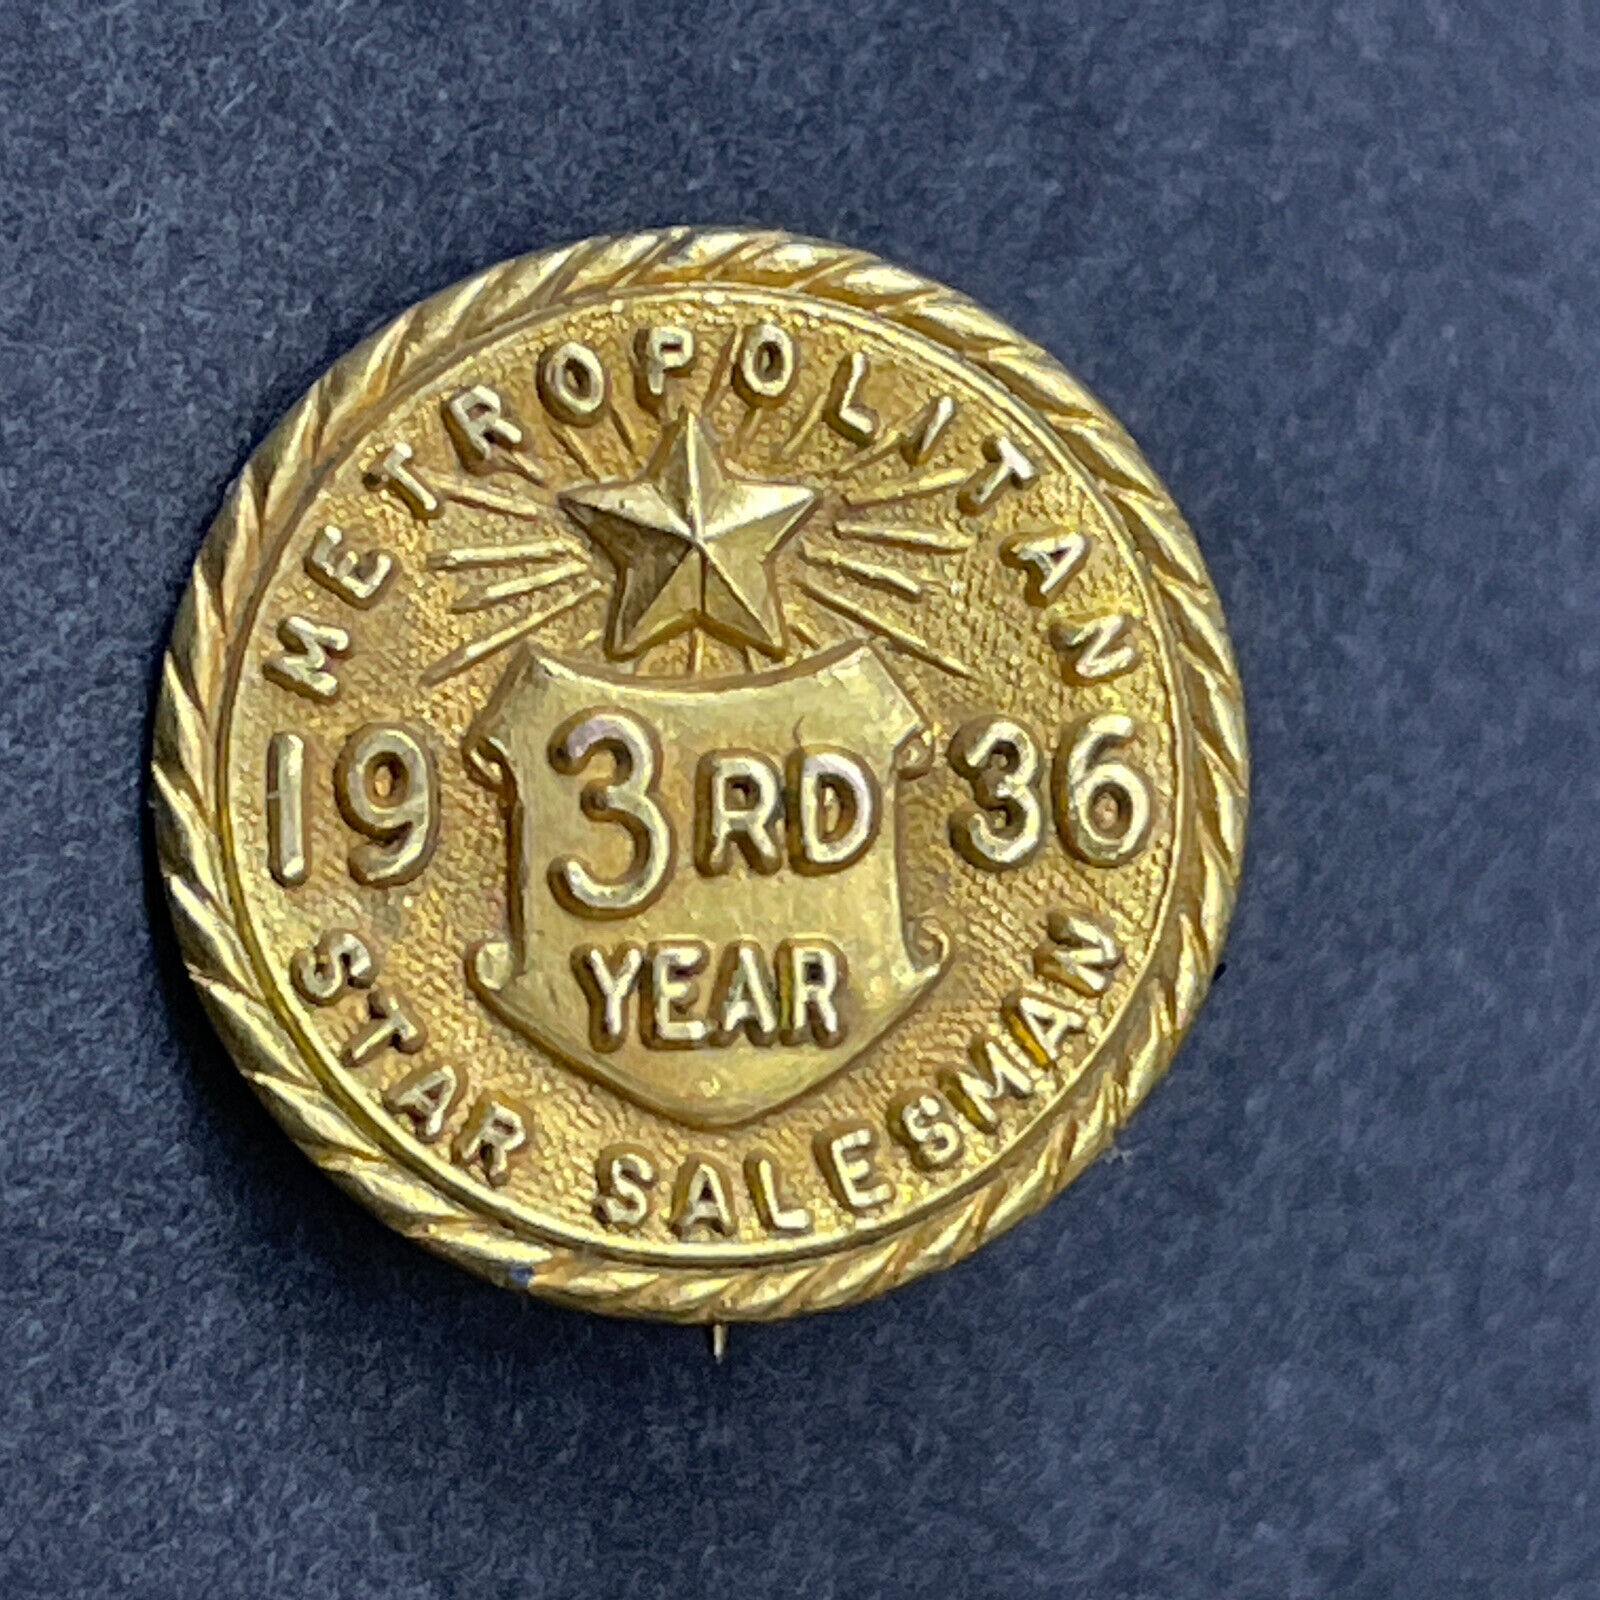 VTG 1936 Met Metropolitan Life Insurance Co. Salesman Service Award Pin 10k GF